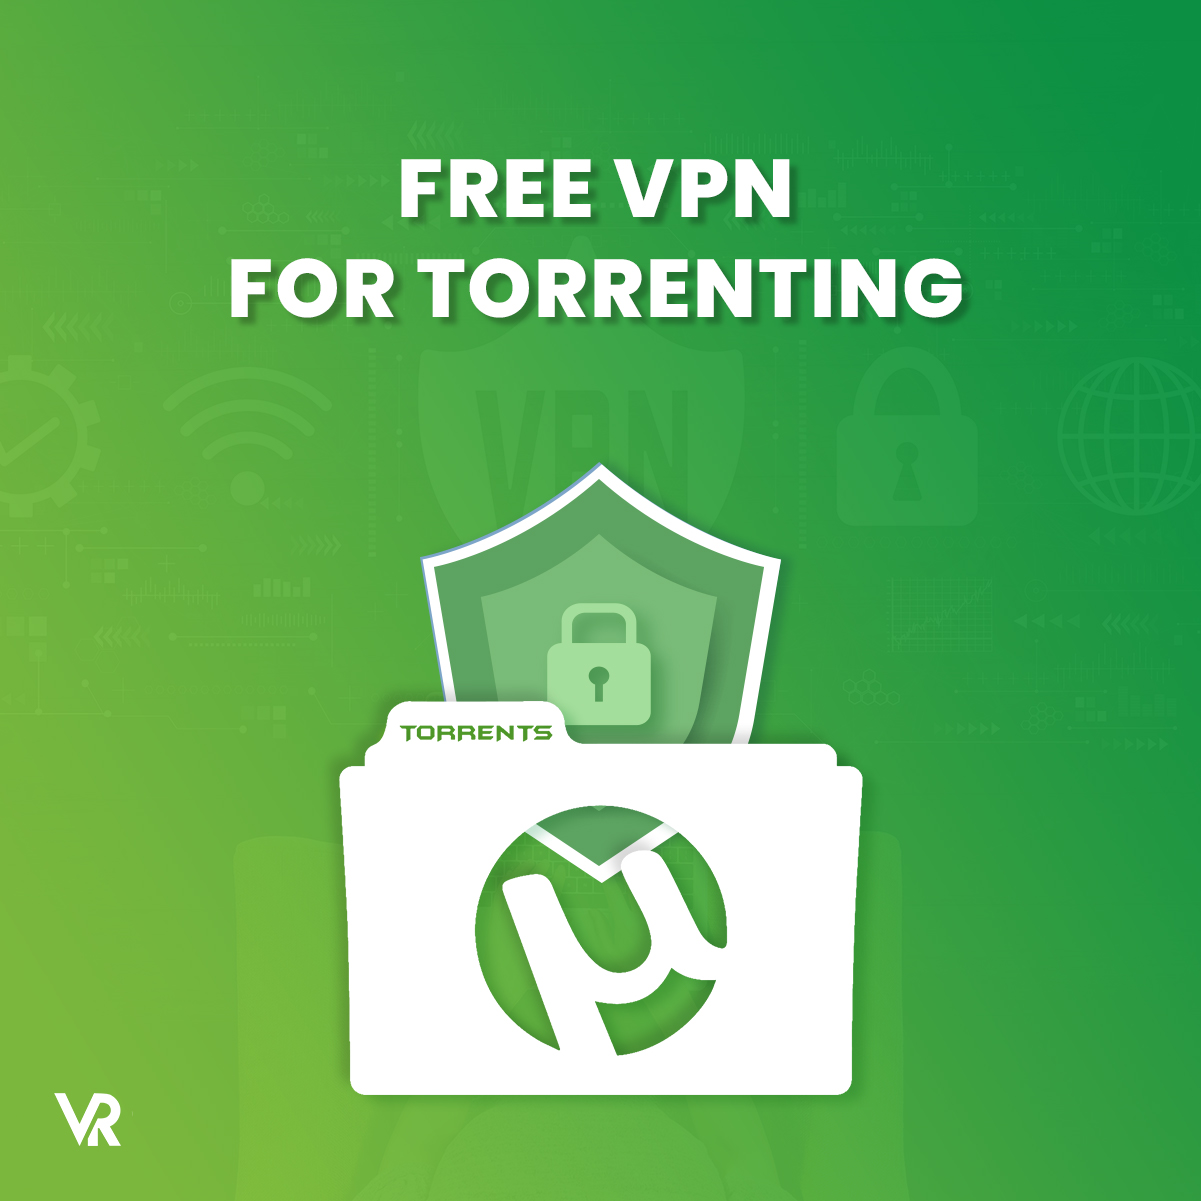 Free vpn for torrenting FeaturedImage